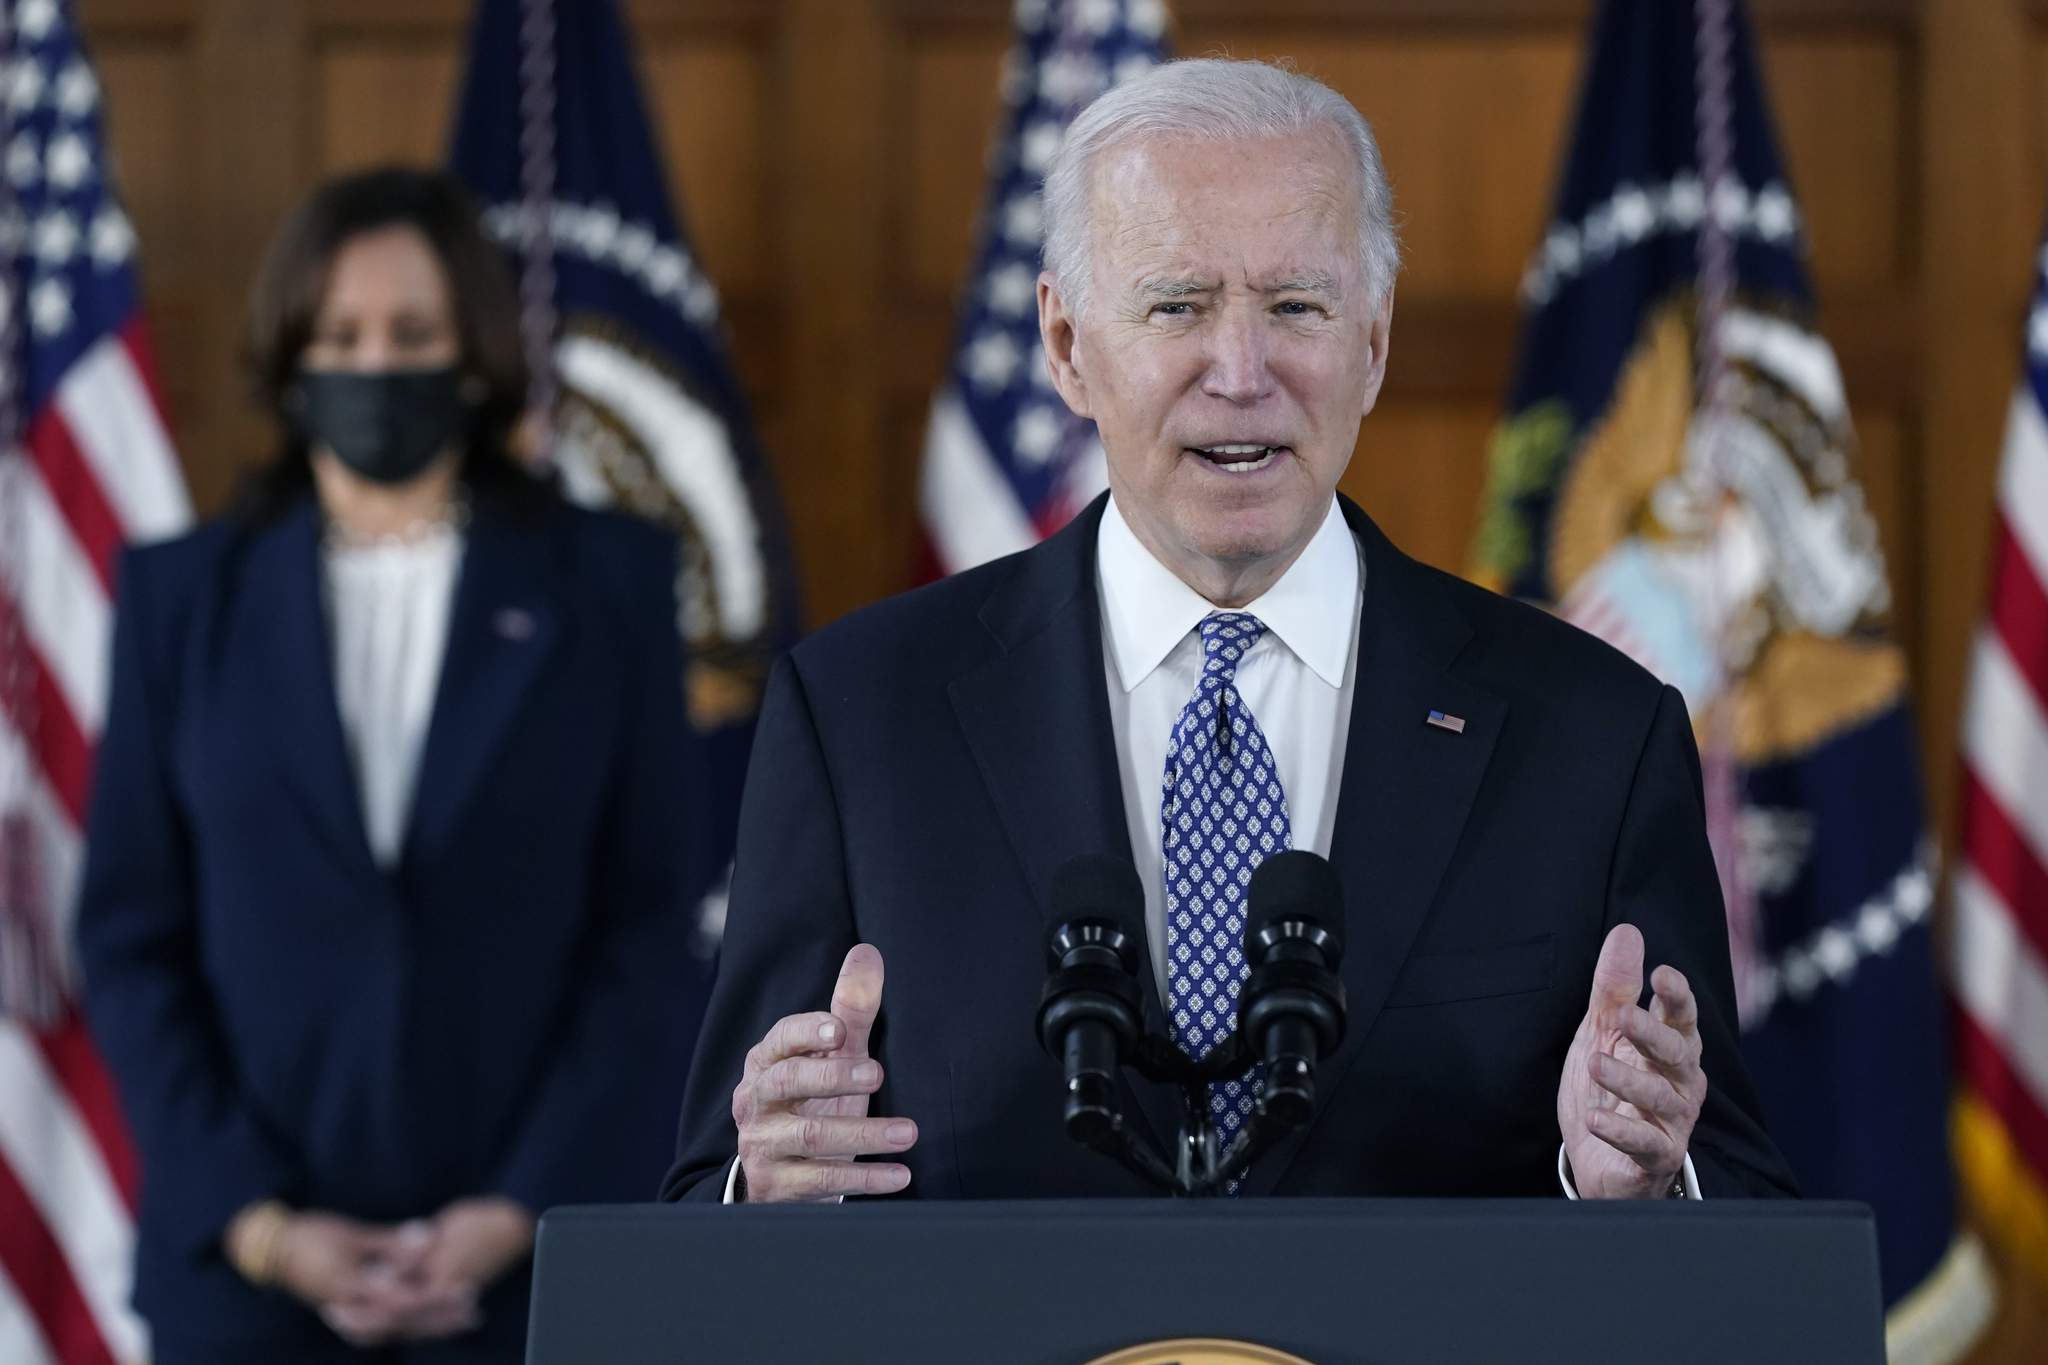 Biden, Harris offer solace, denounce racism in Atlanta visit